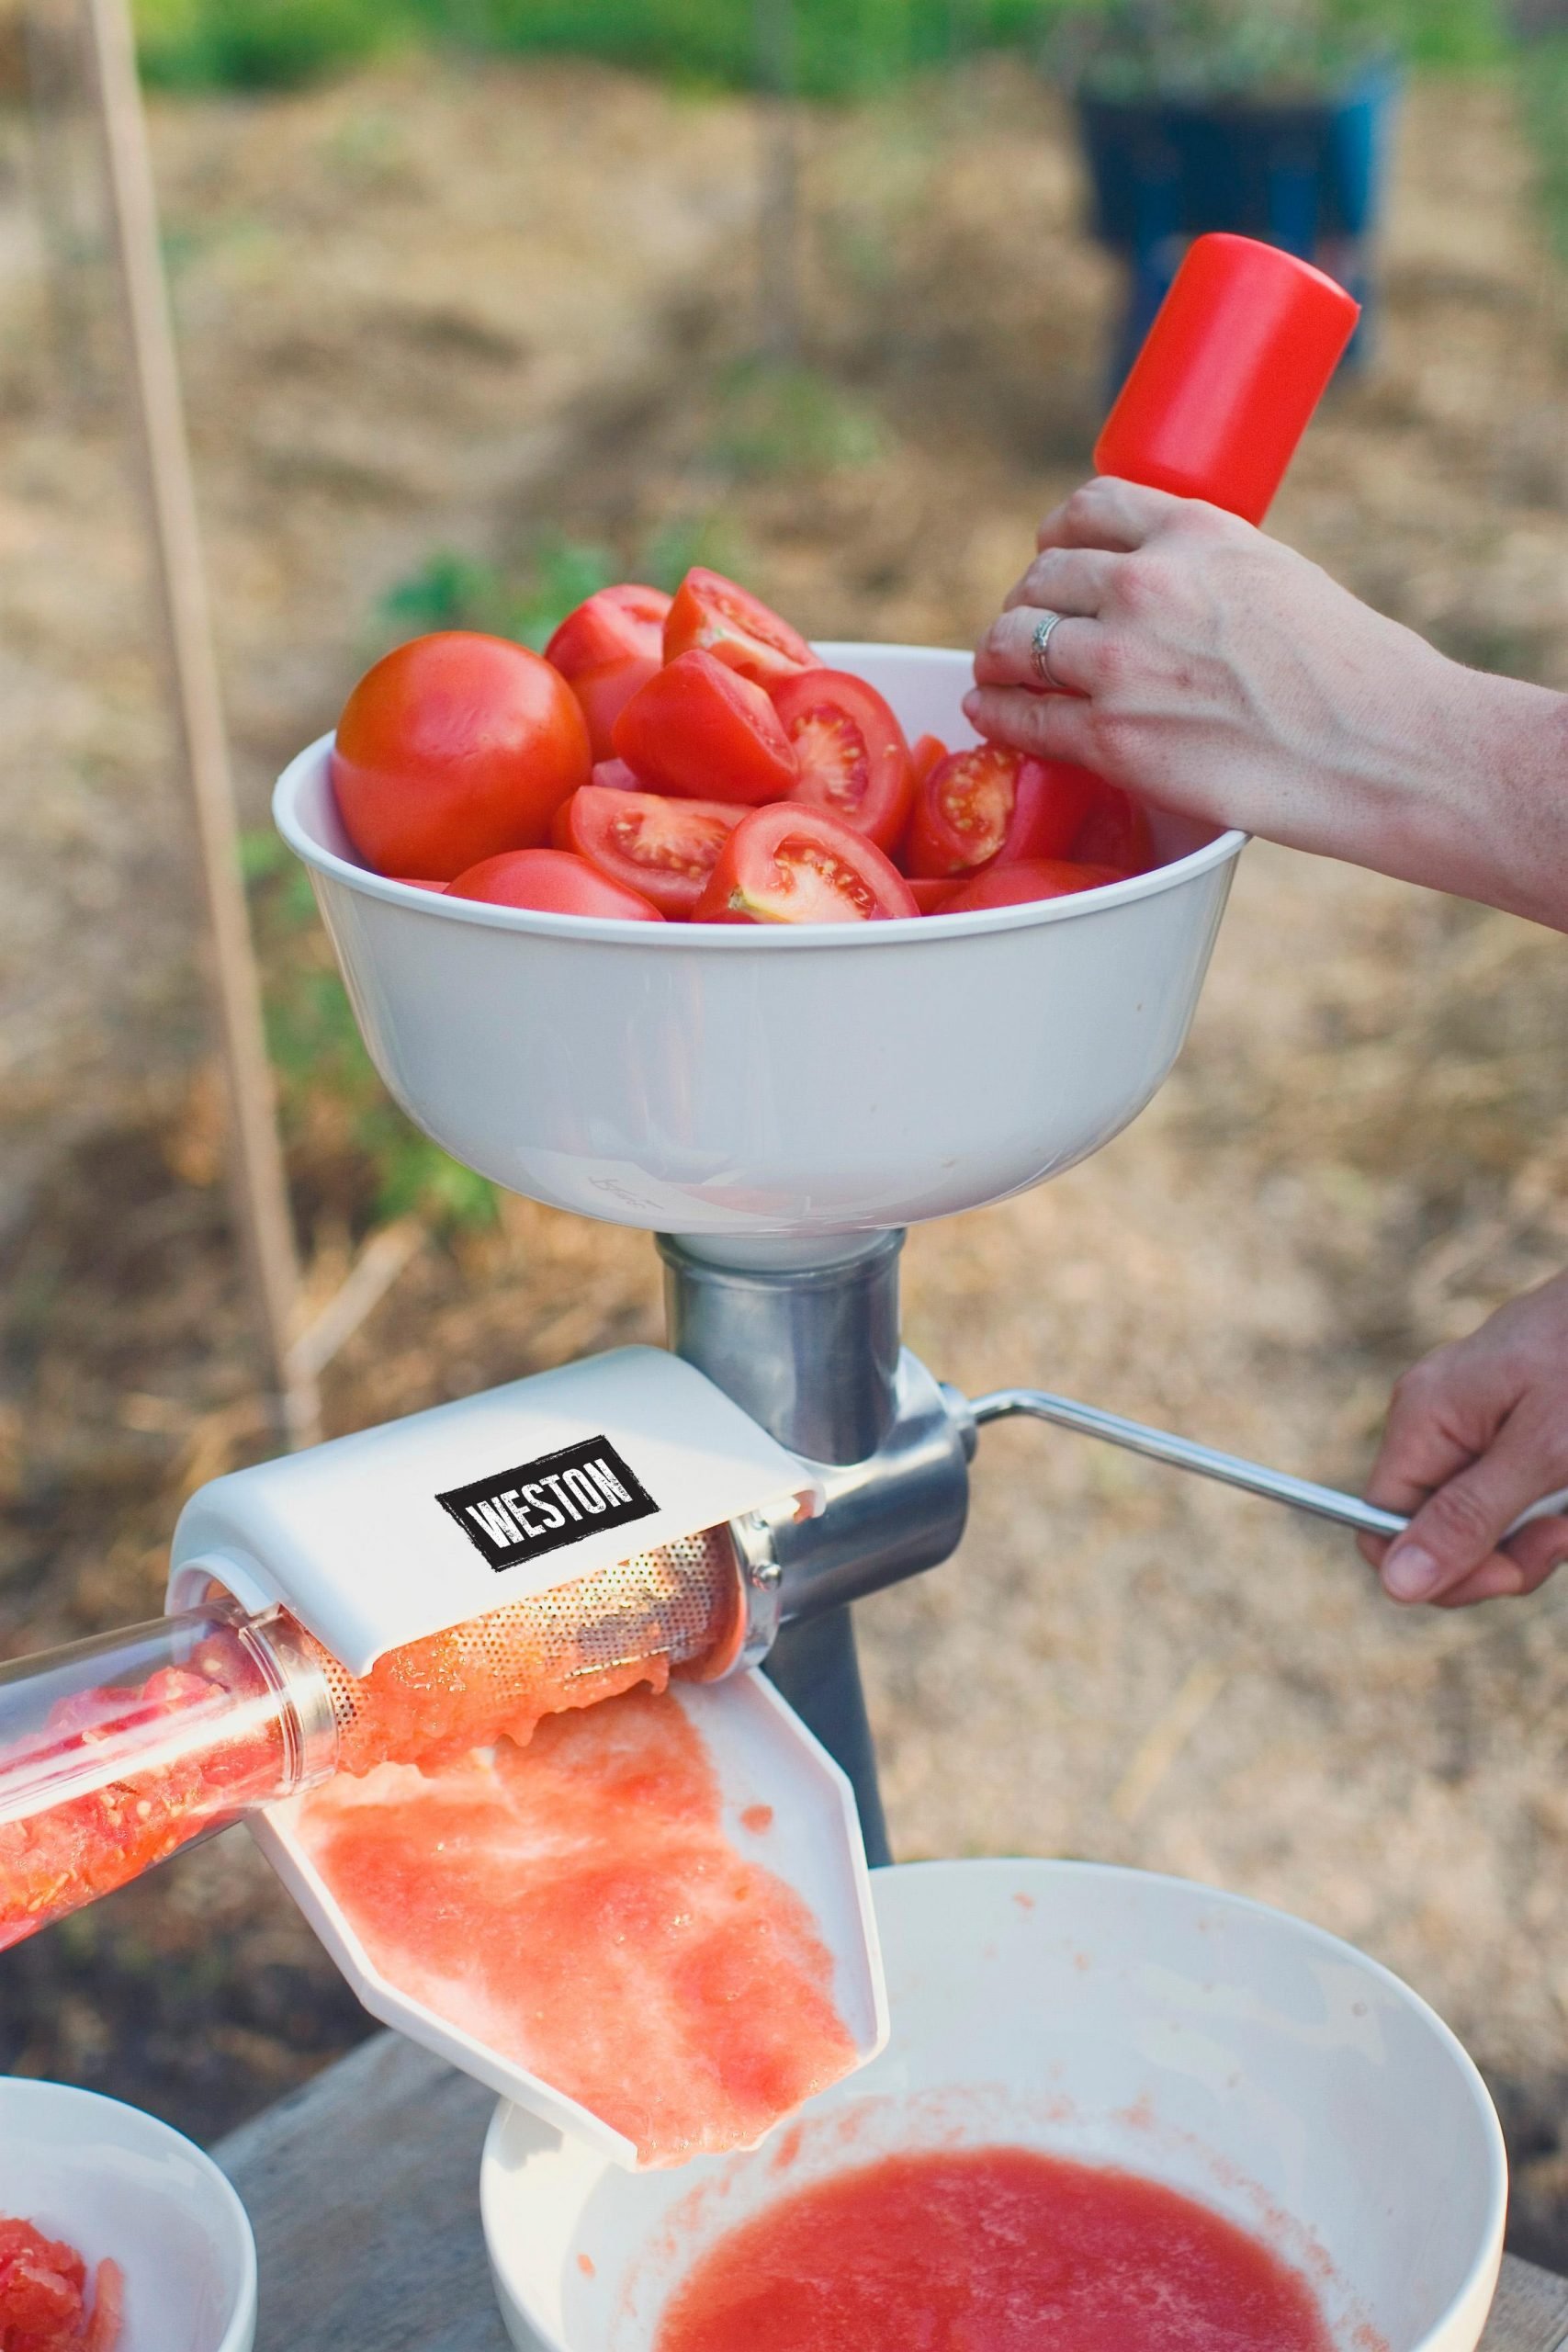 Amazon.com: Weston Food Strainer and Sauce Maker for Tomato, Fresh ...